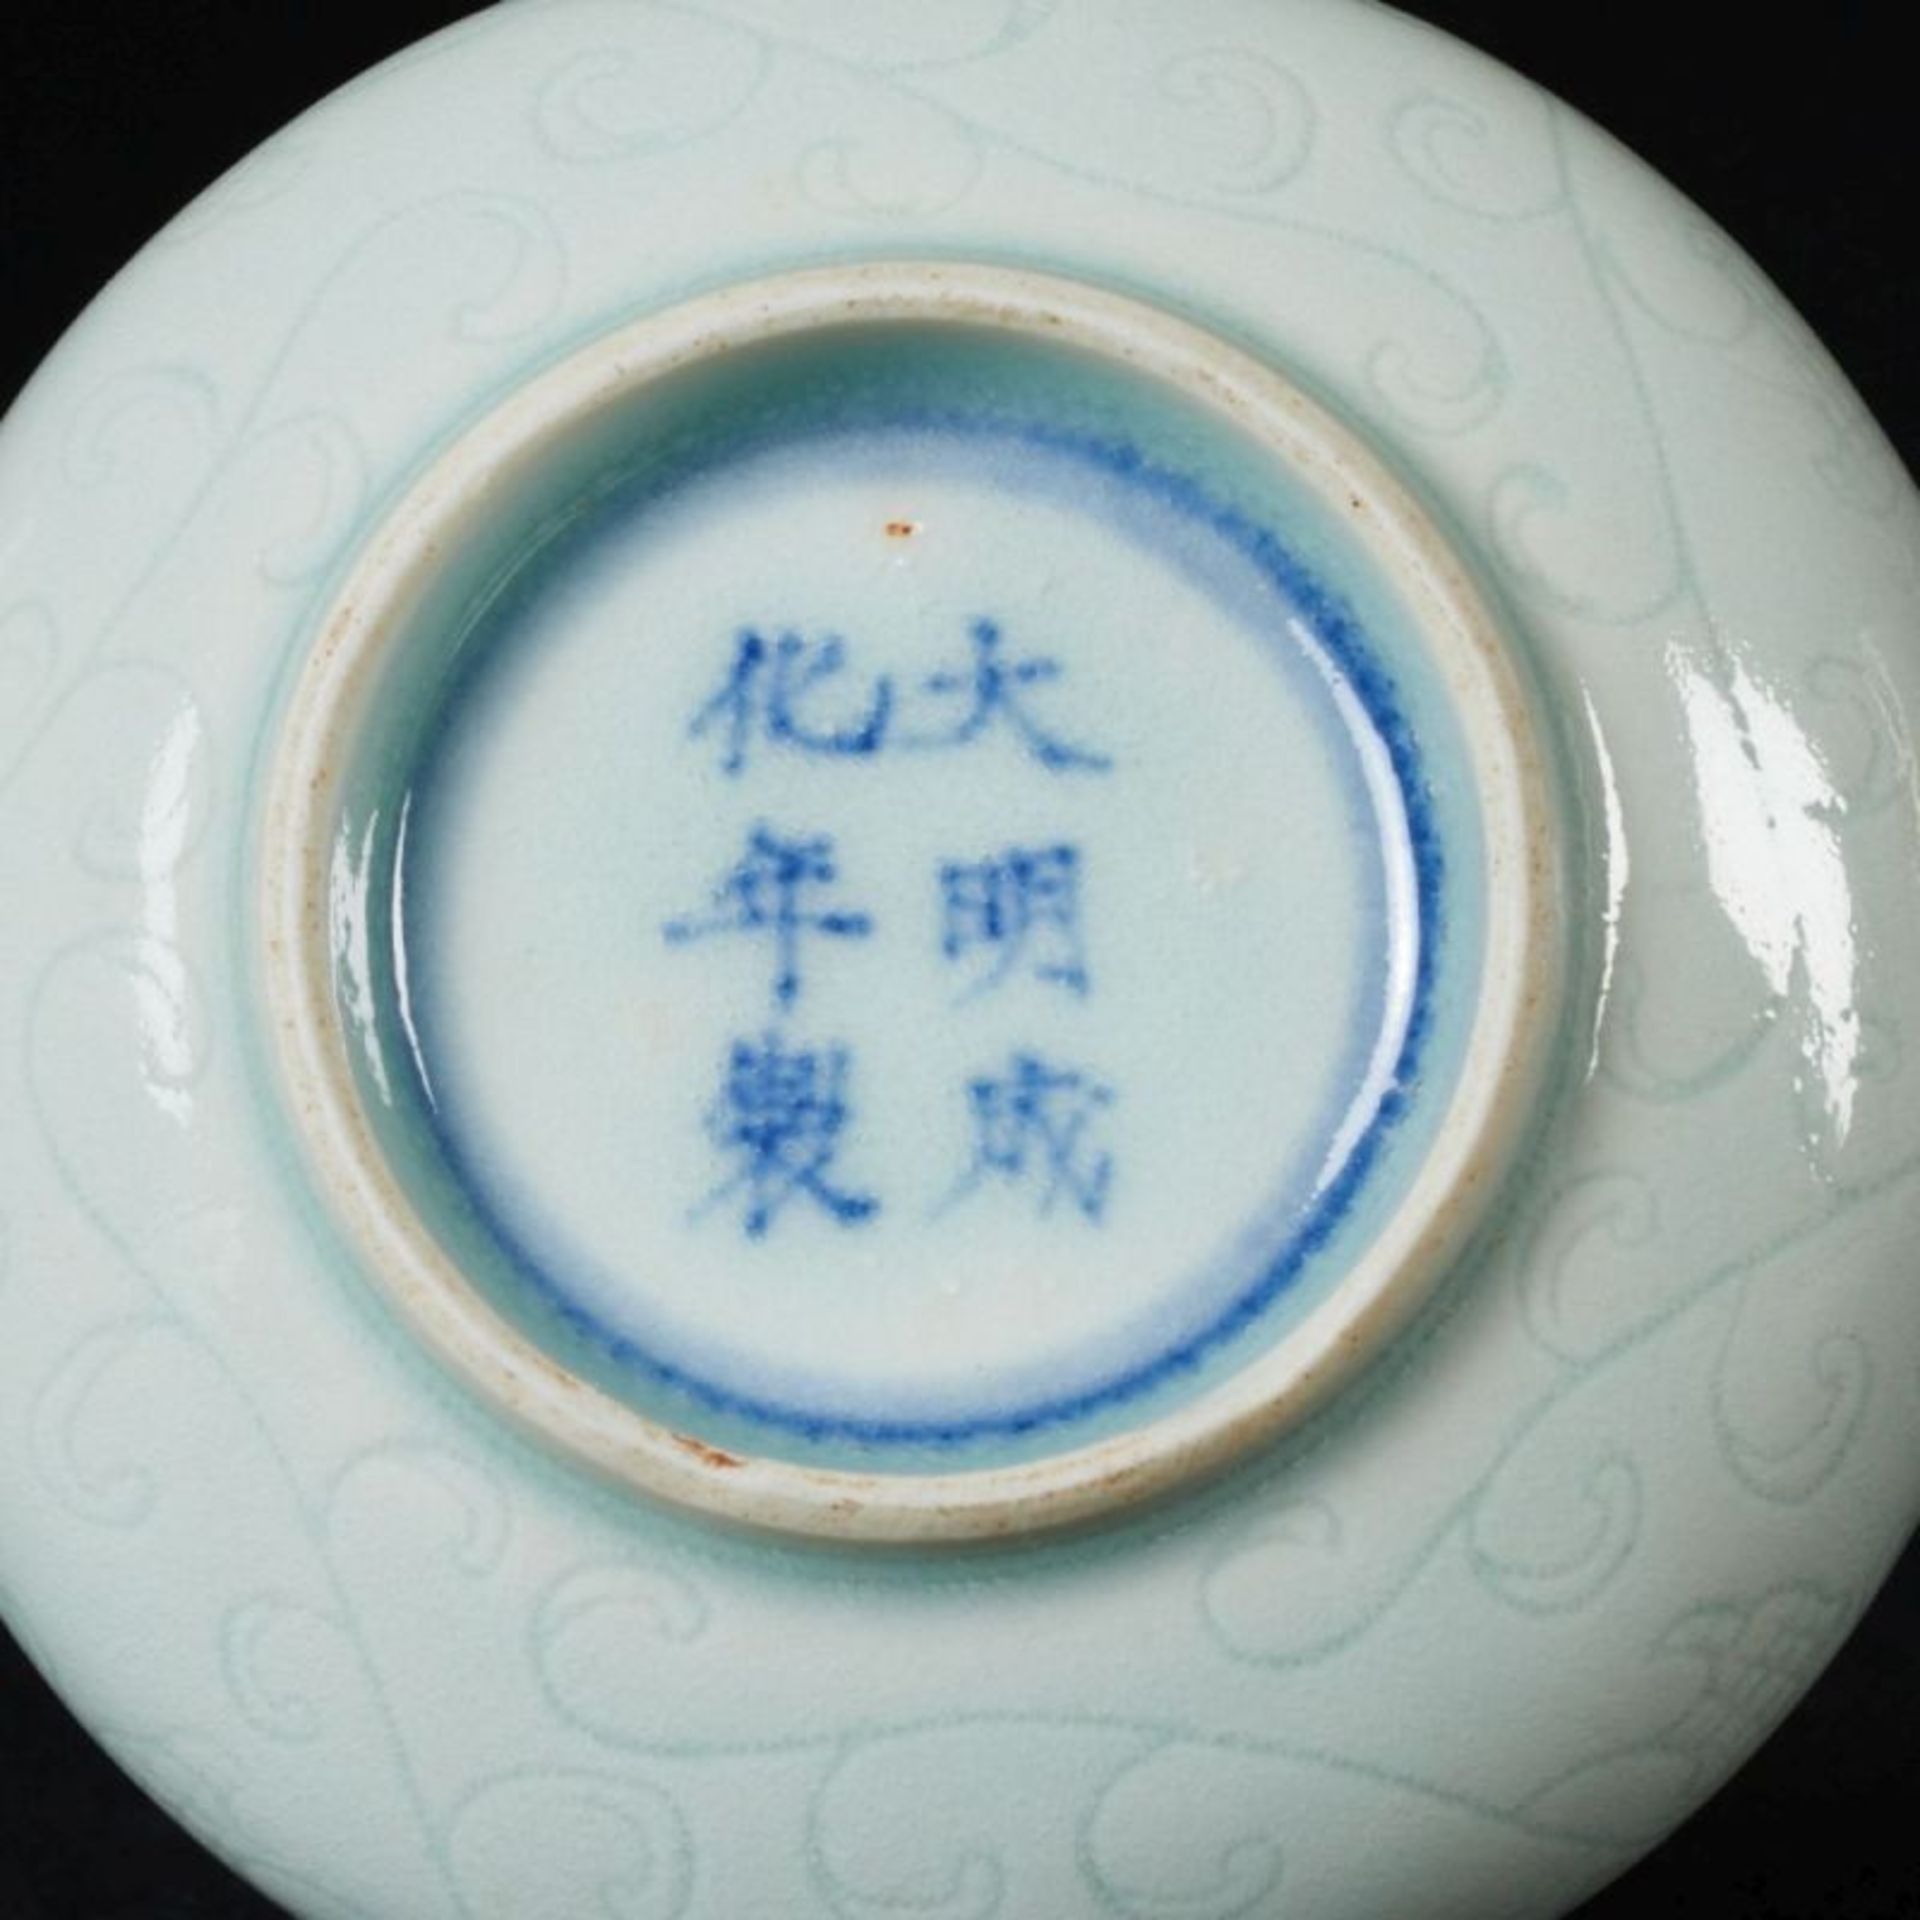 Tuschgefäß mit Qingbai Glasur, China, Qing-Dynastie, 19. Jahrhundert - Image 2 of 2